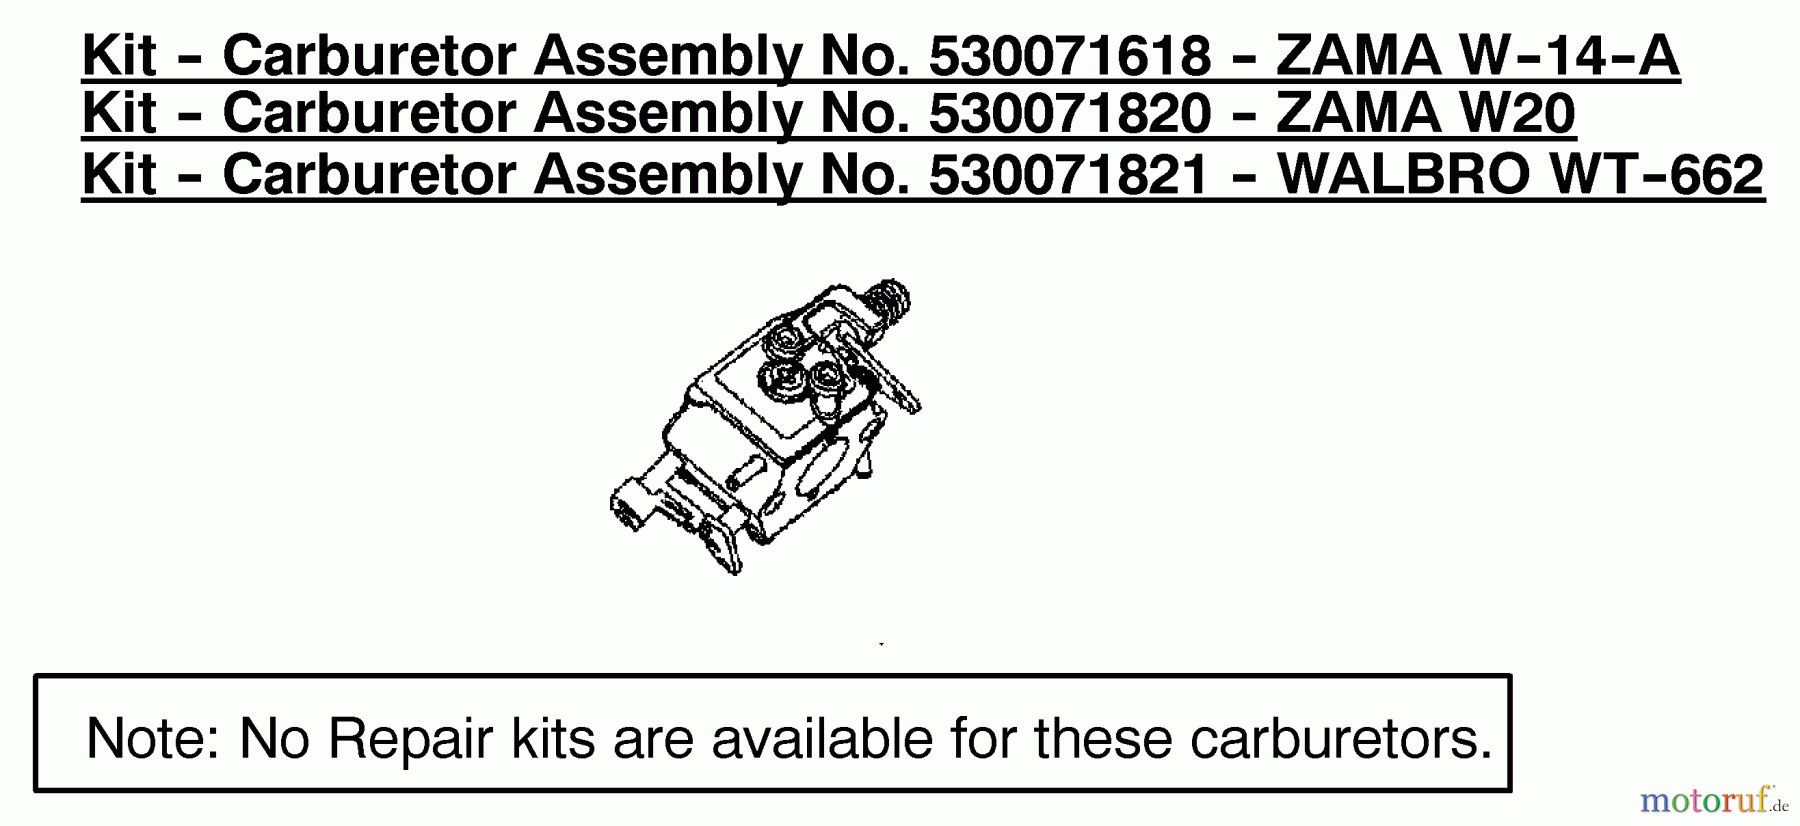  Poulan / Weed Eater Motorsägen 1975 (Type 6) - Poulan Woodshark Chainsaw Carburetor Assembly (Walbro WT-662) P/N 530071821